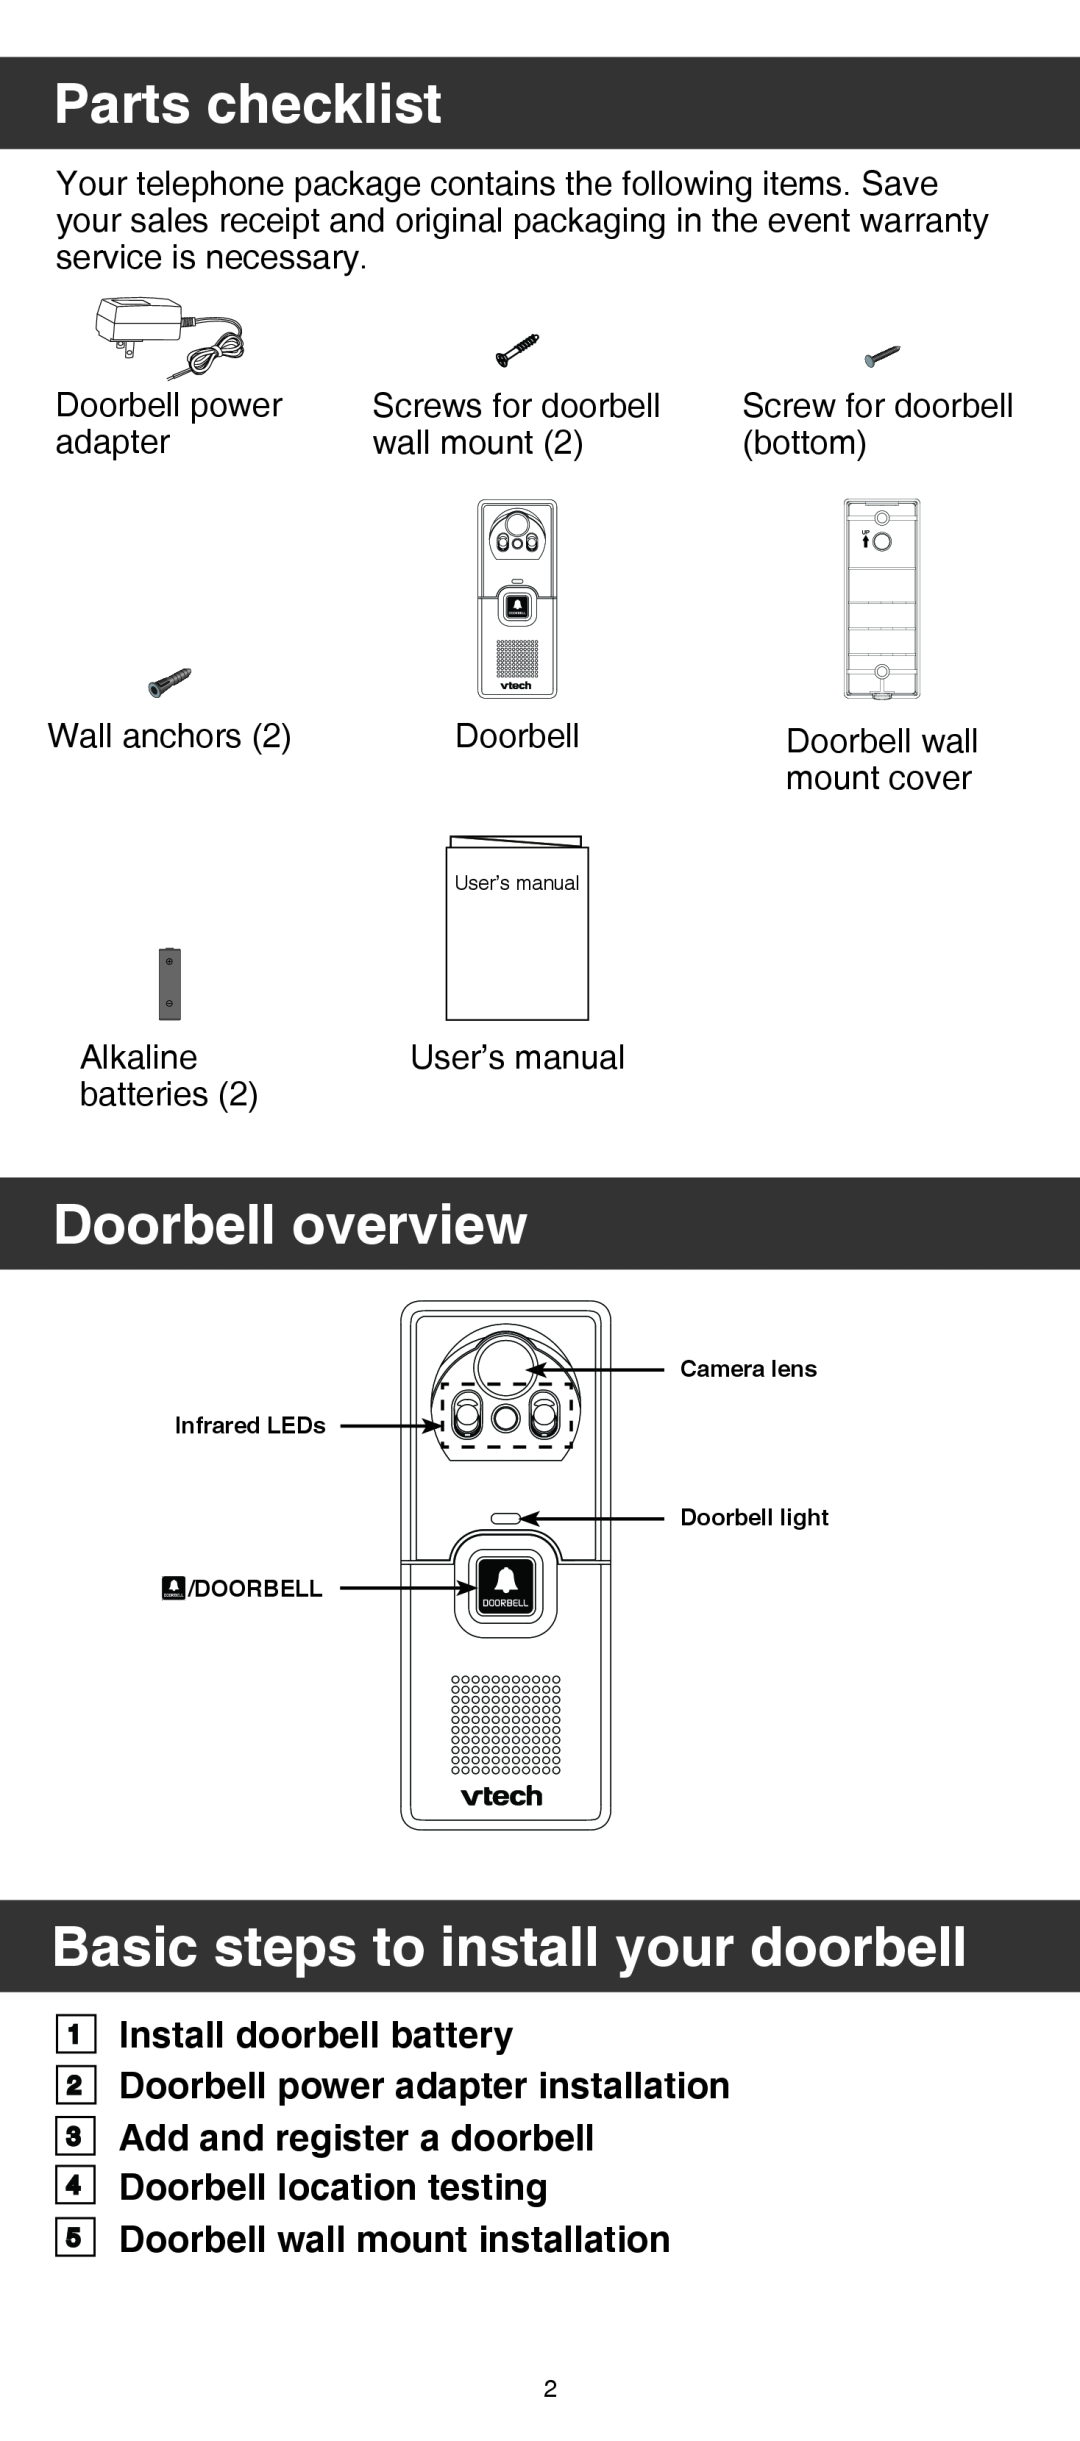 VTech IS7121/IS7121-2/IS7121-22 user manual Install doorbell battery, Parts checklist, Doorbell overview 